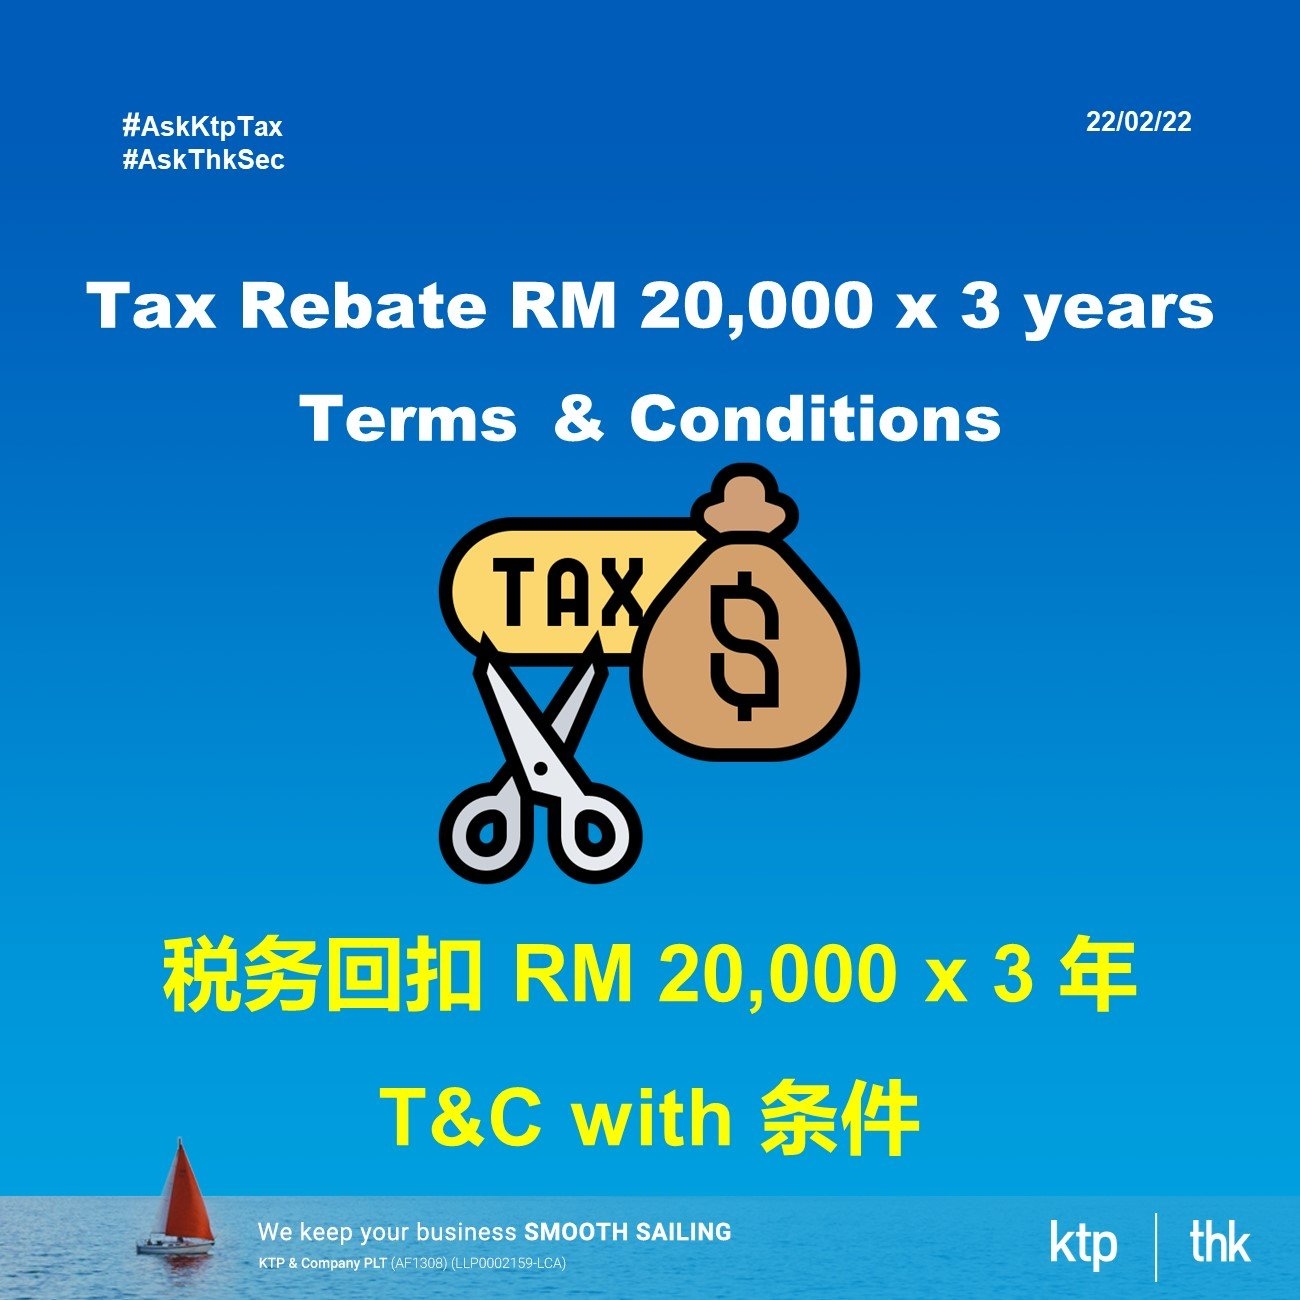 tax-rebate-20-000-malaysia-feb-22-2022-johor-bahru-jb-malaysia